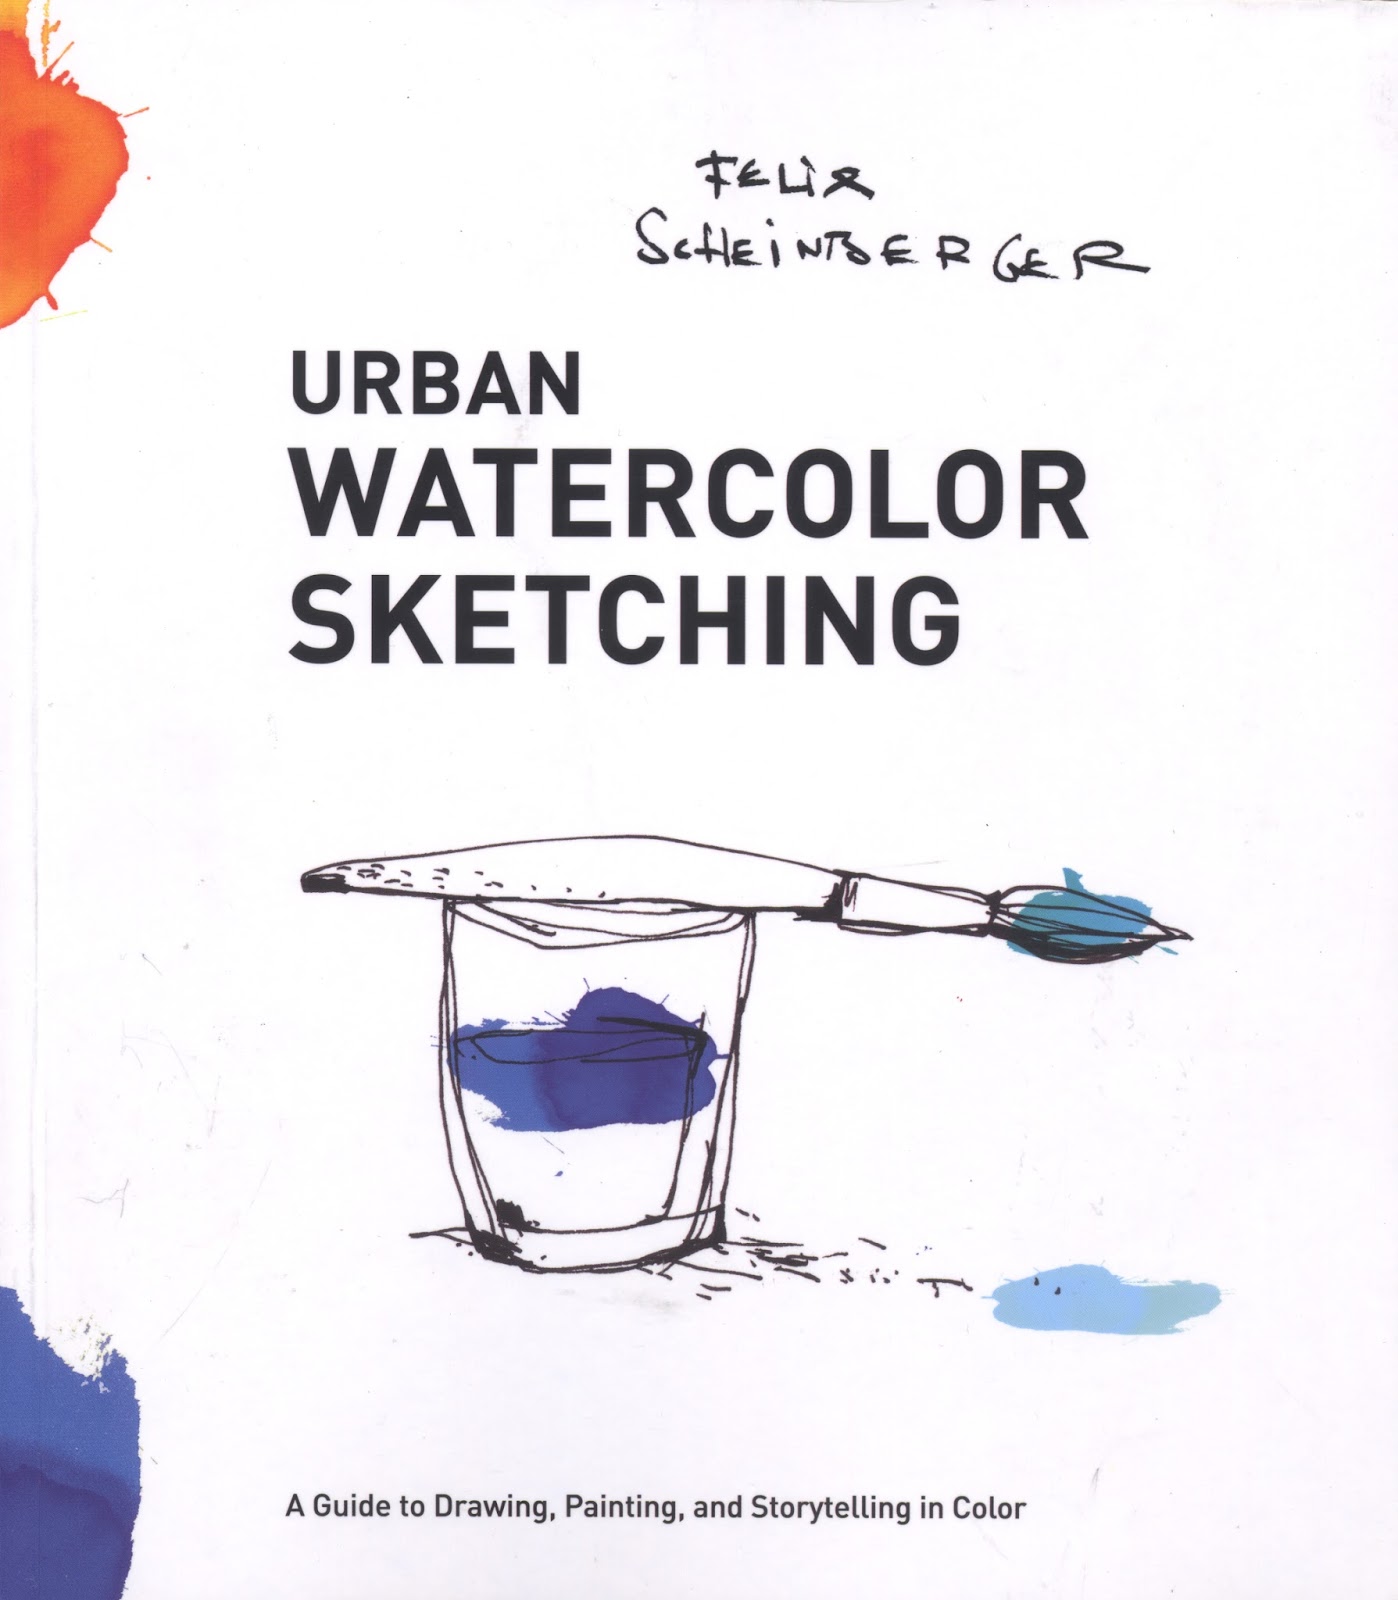 Small Watercolor Sketchbook, Painting Sketch